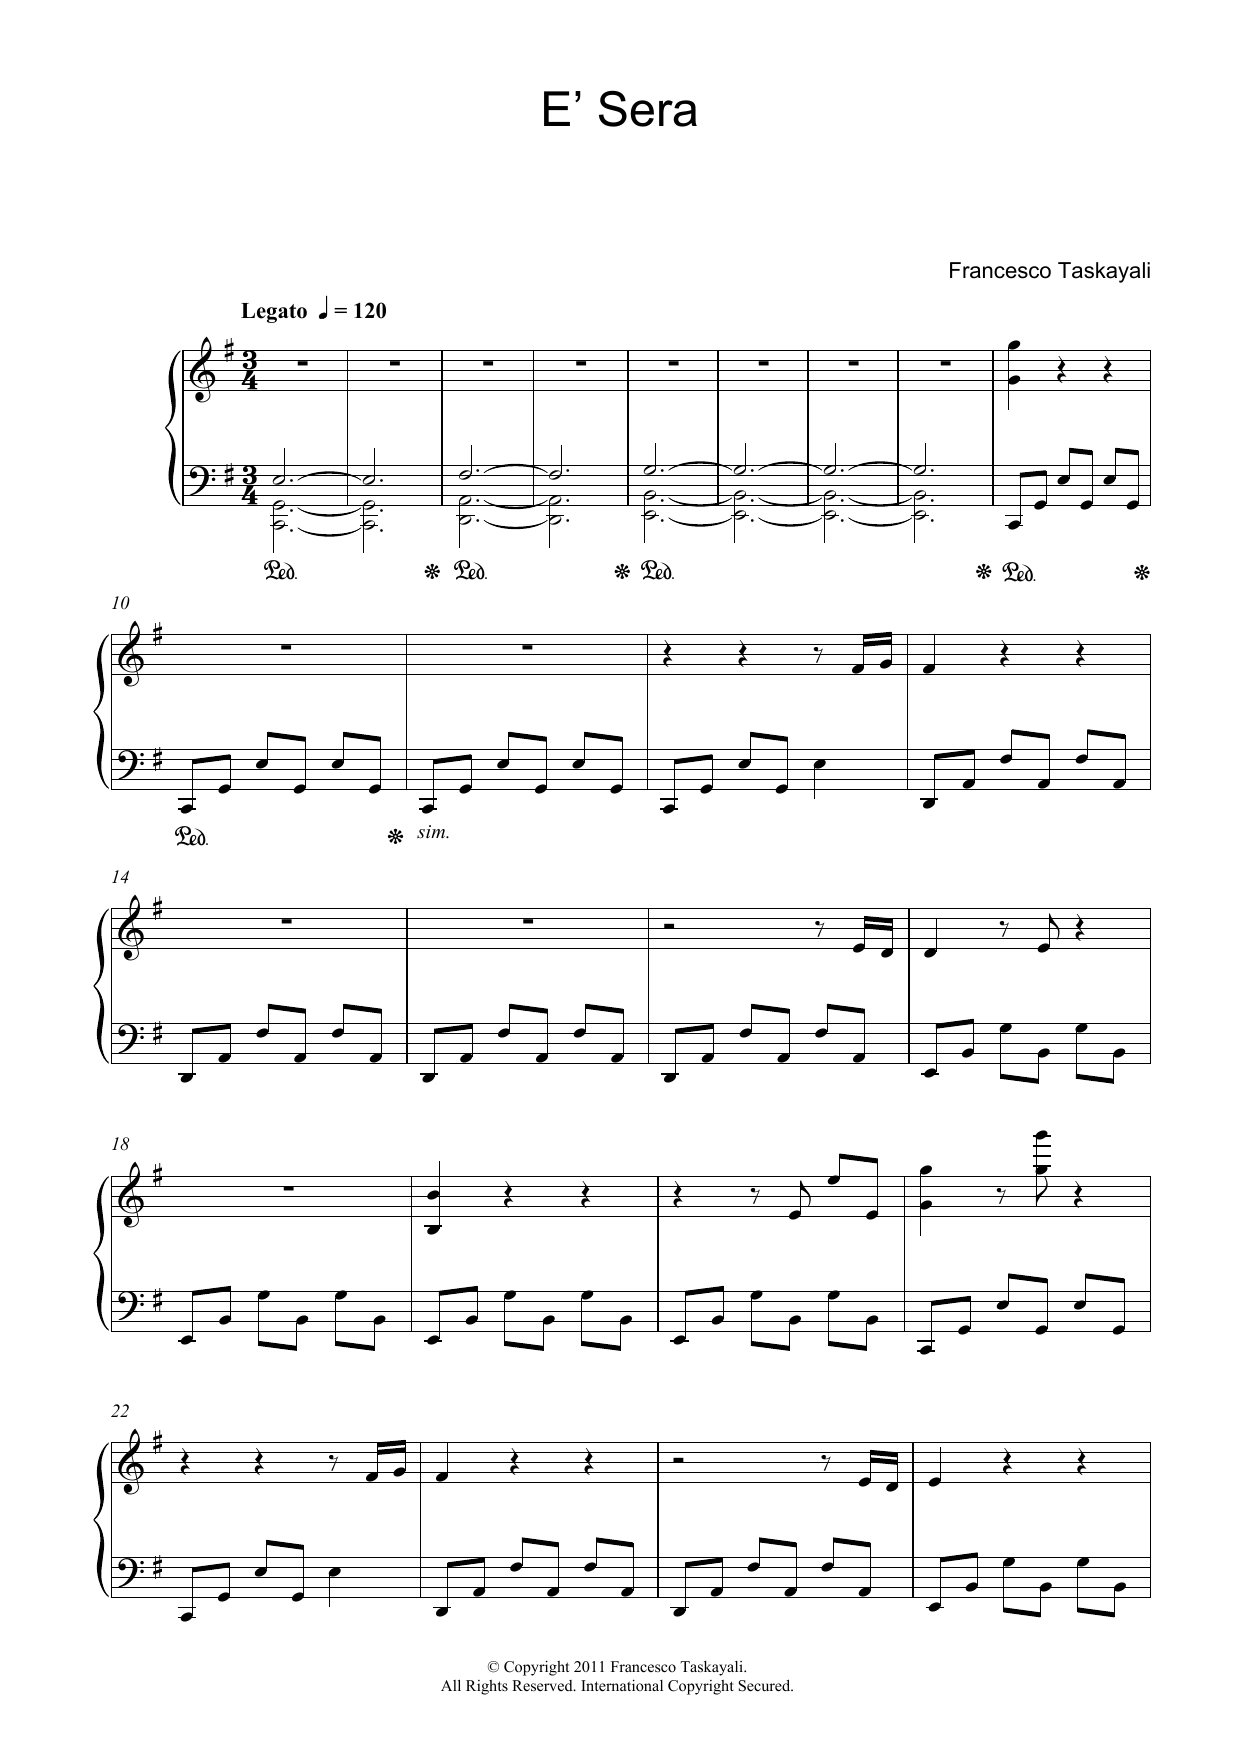 Francesco Taskayali E' Sera Sheet Music Notes & Chords for Piano - Download or Print PDF